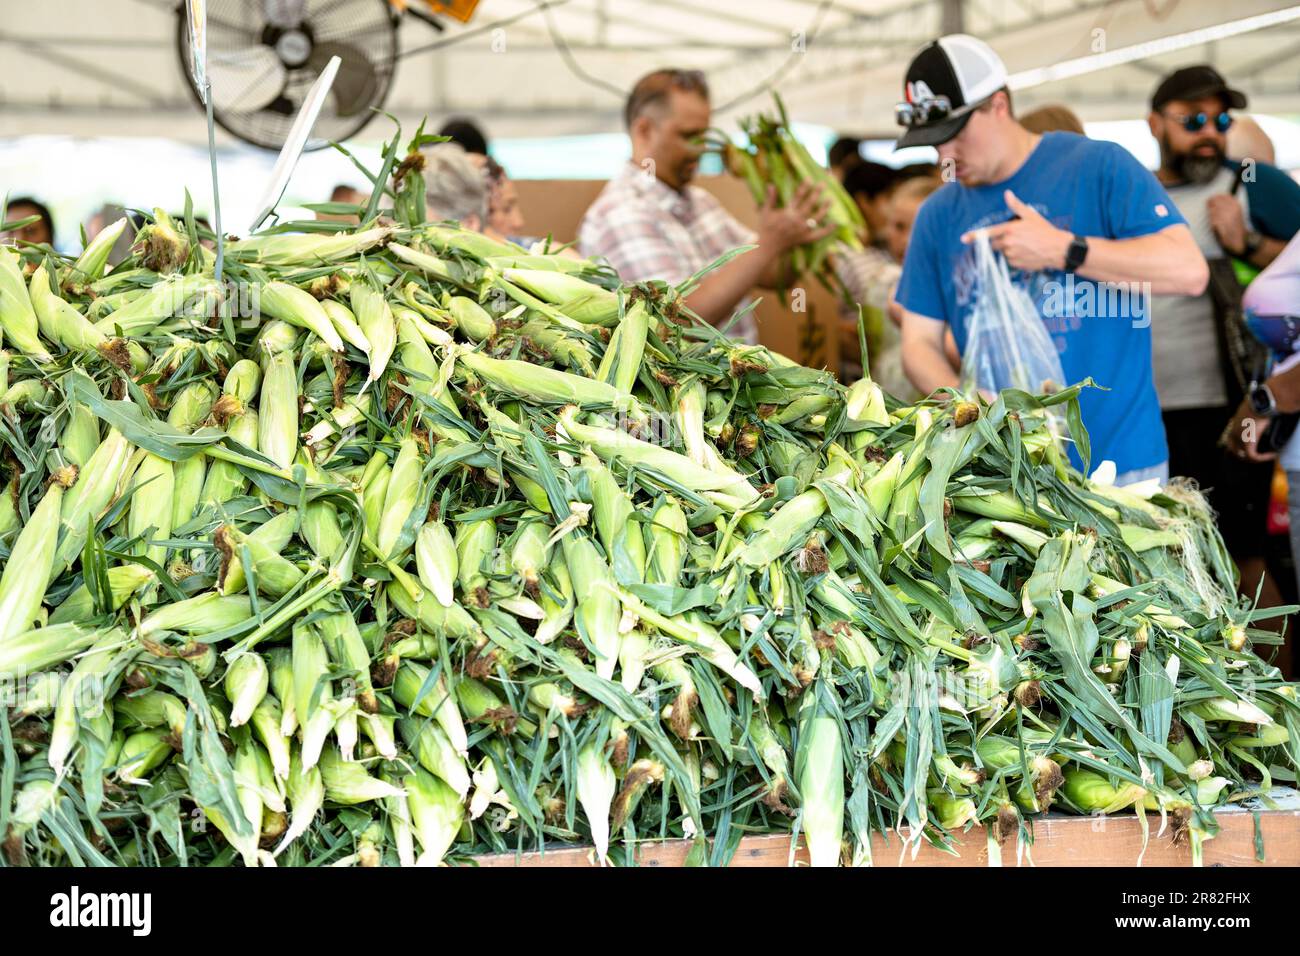 People shopping, buying Raw Corn in Husk Stock Photo